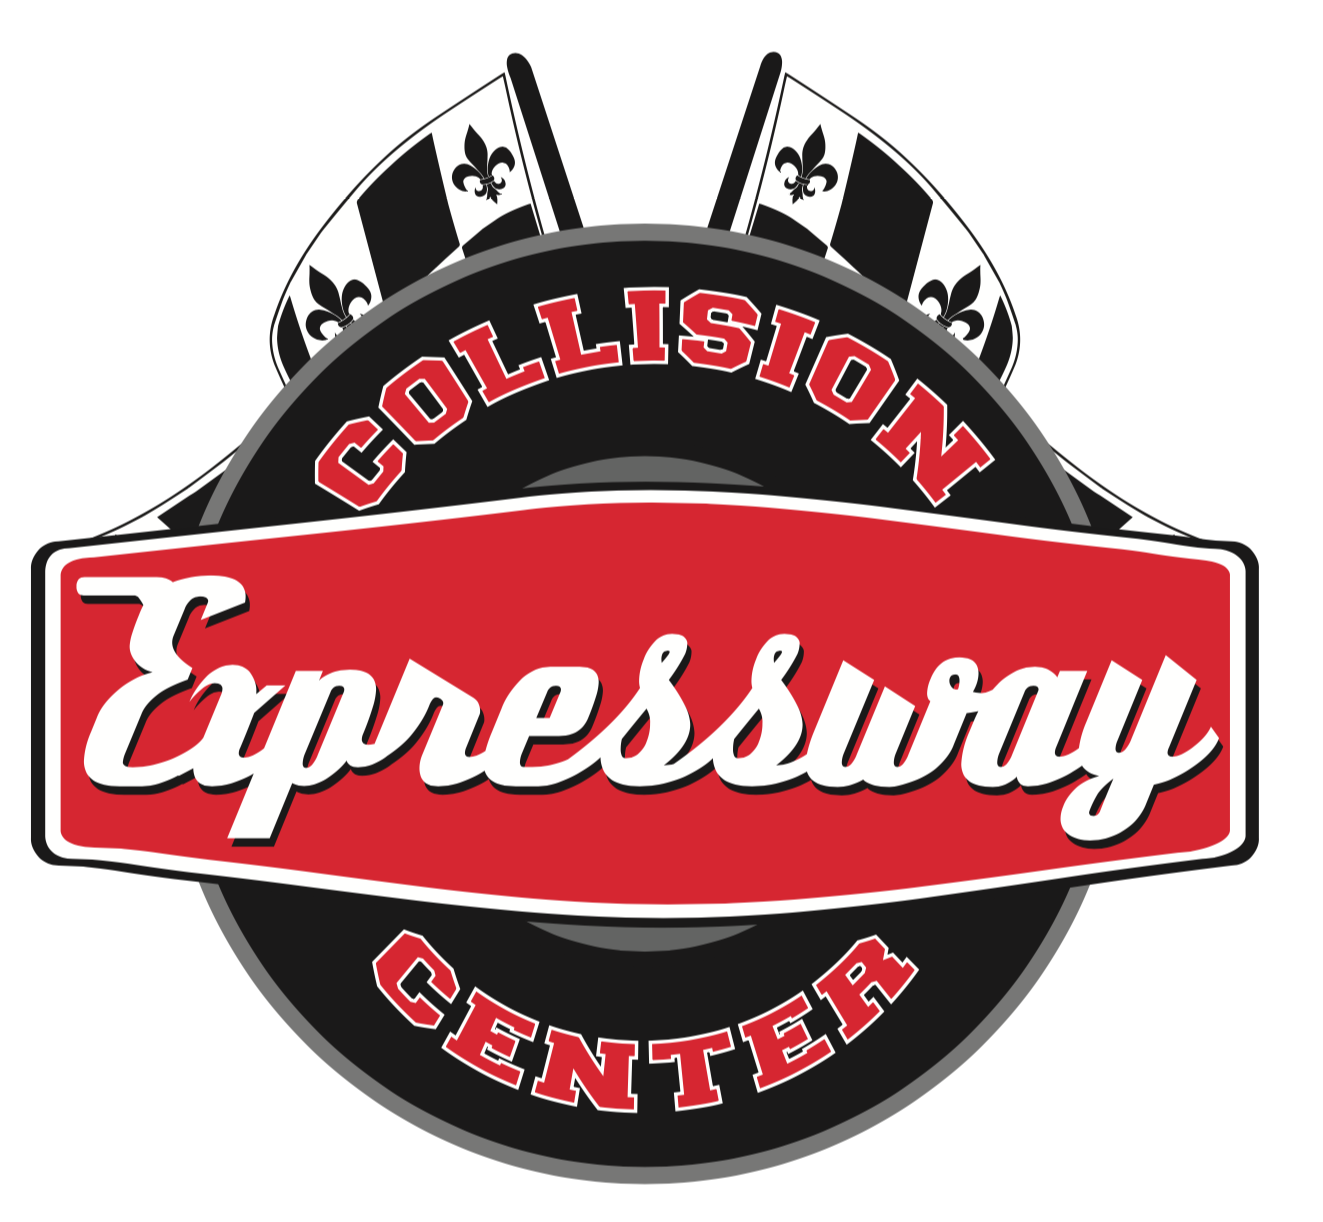 Expressway Collision Center Logo